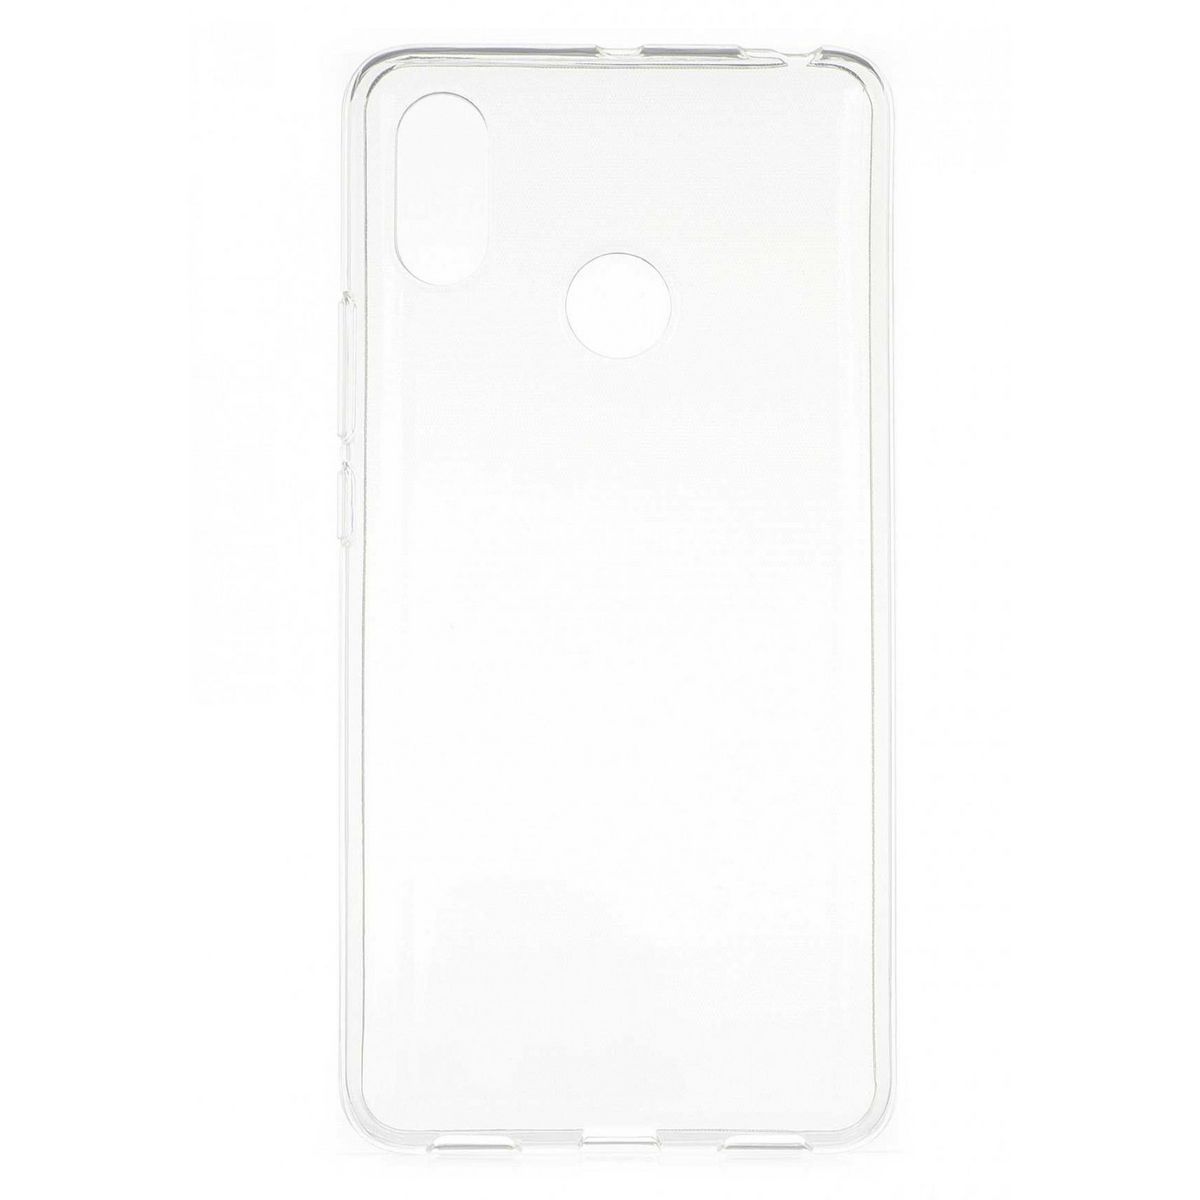 amahousse Coque souple Xiaomi Mi Max 3 transparente ultra fine résistante